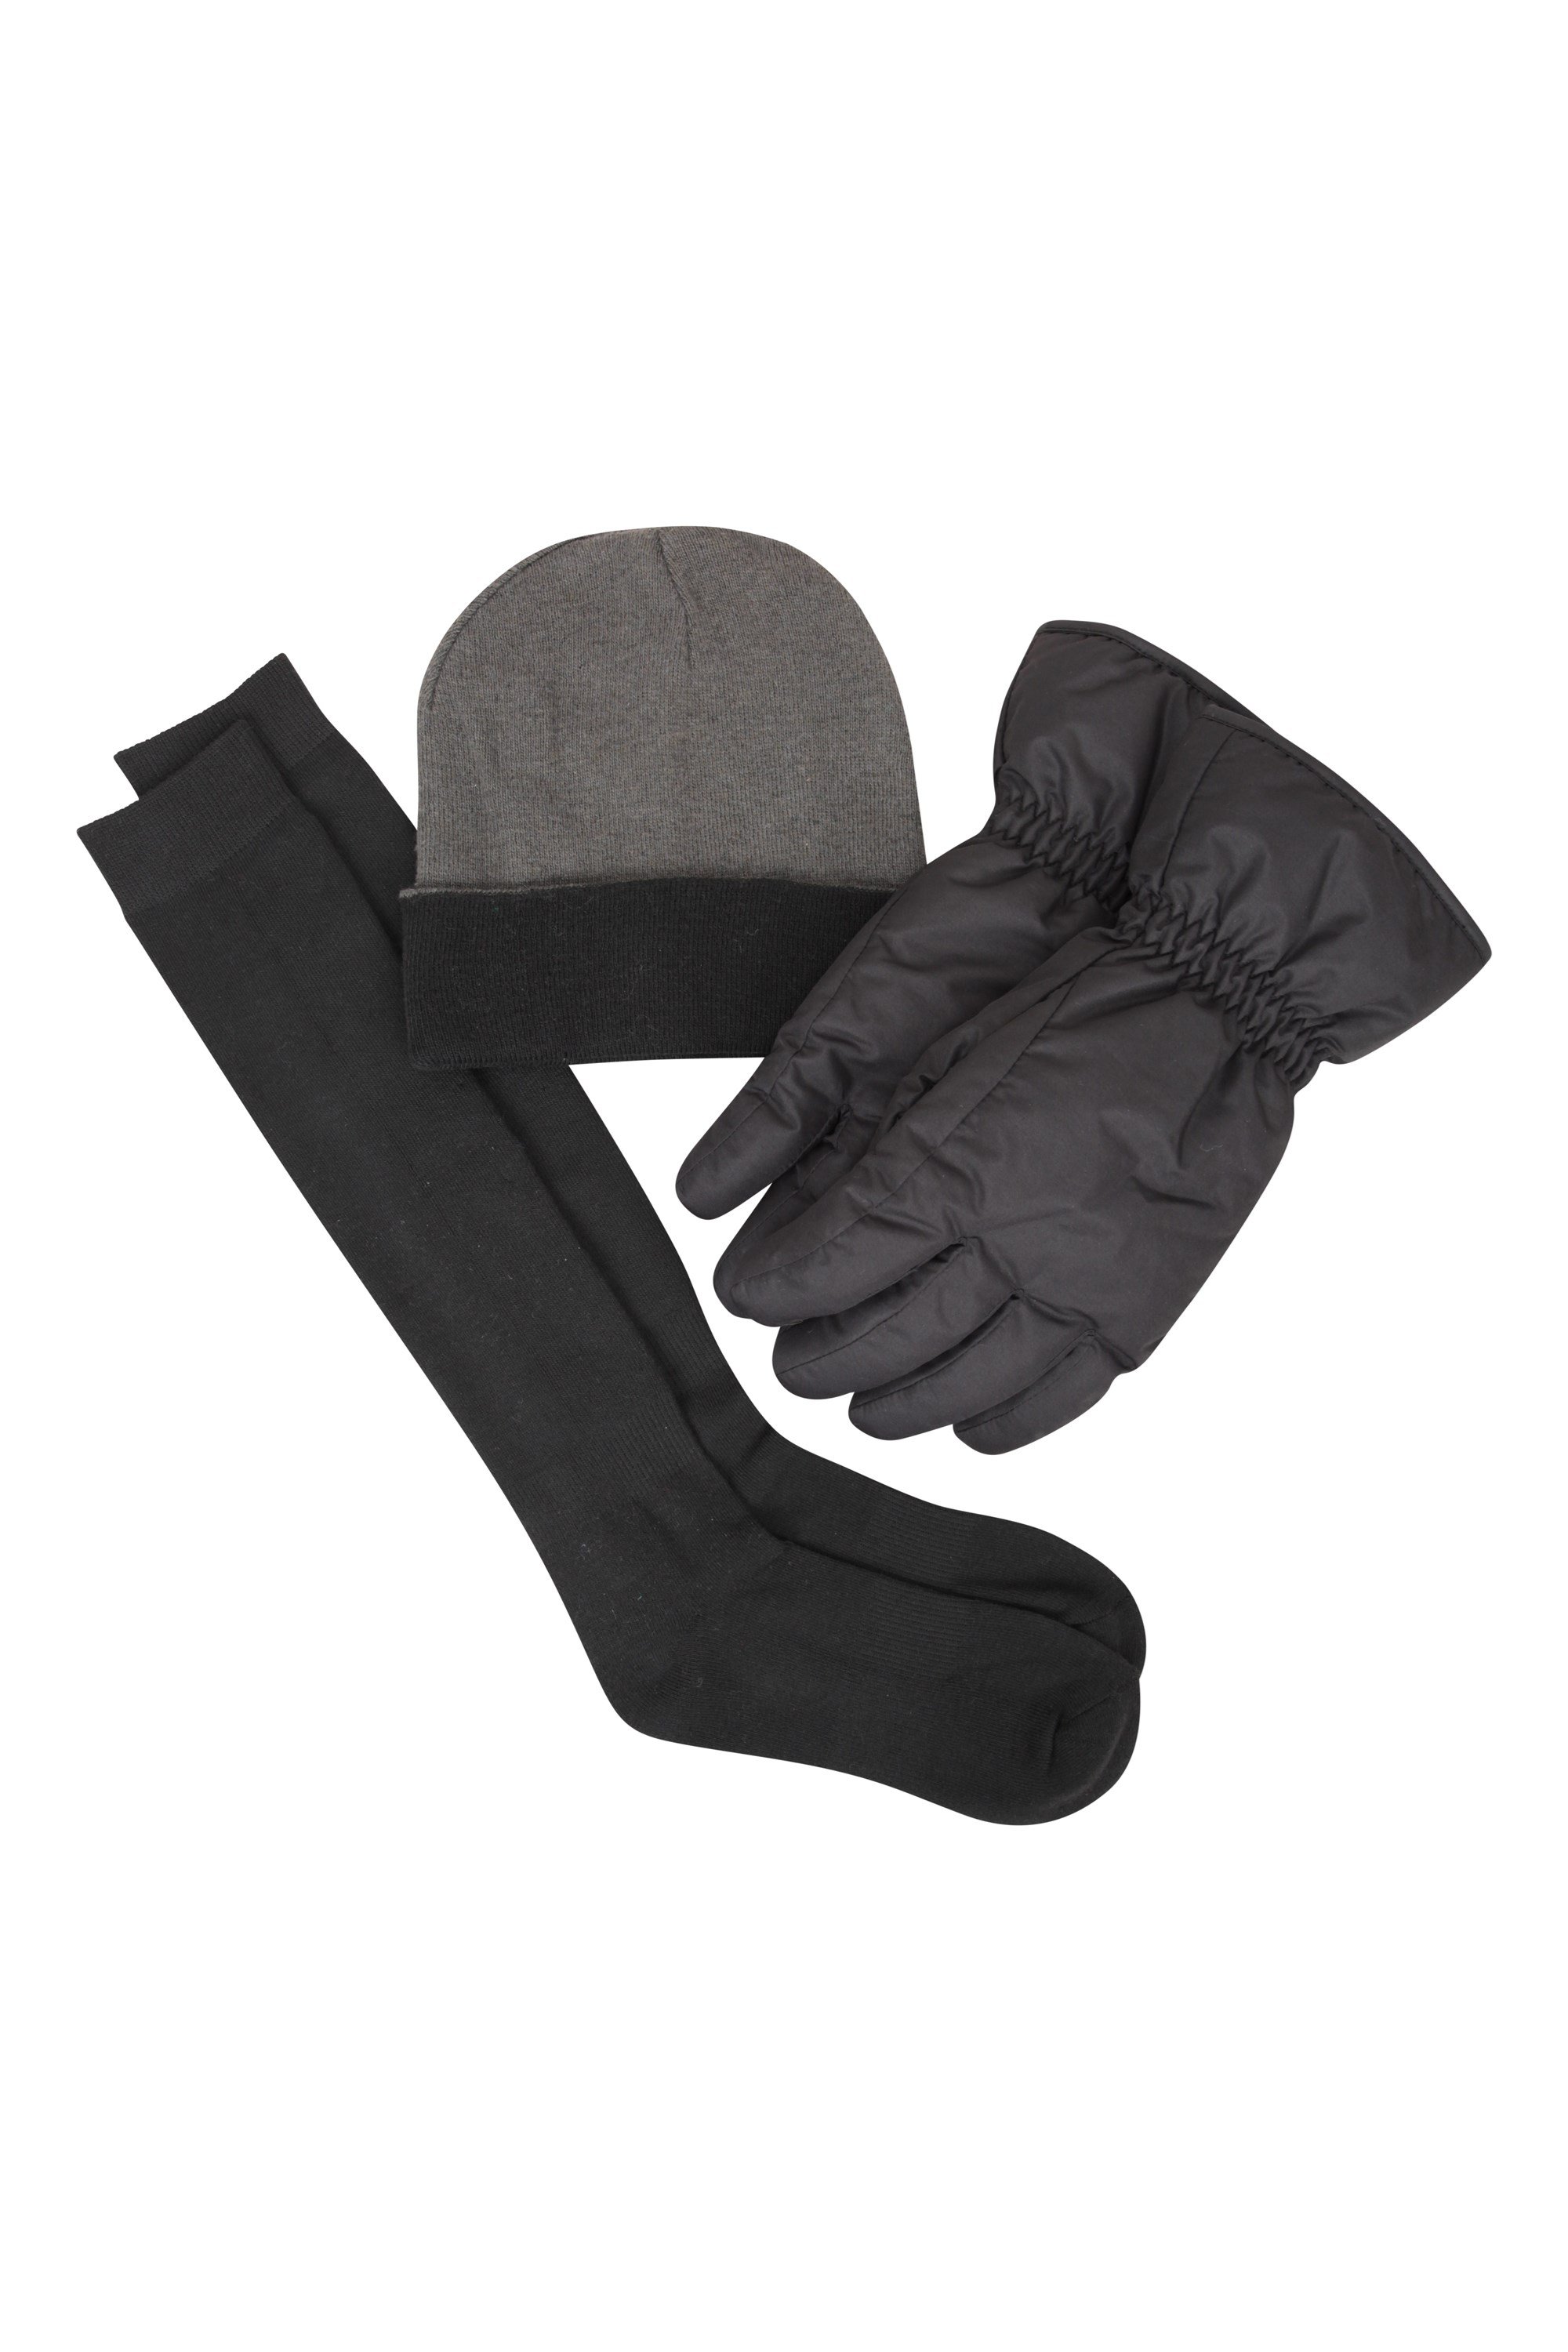 Mens Winter Accessories Set - Black